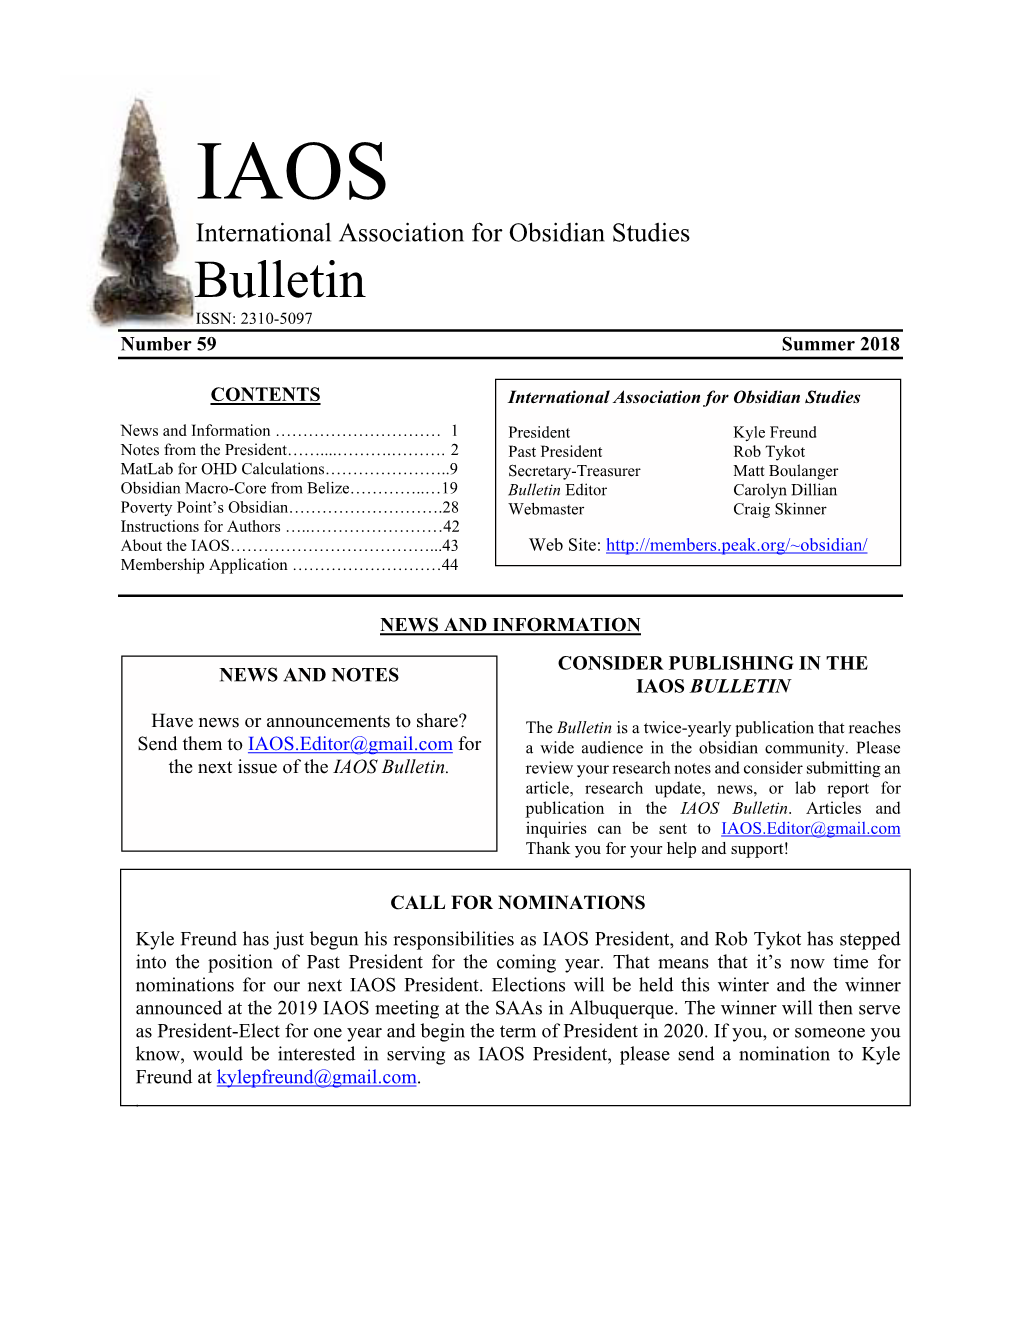 IAOS Bulletin No. 59, Summer 2018 Pg